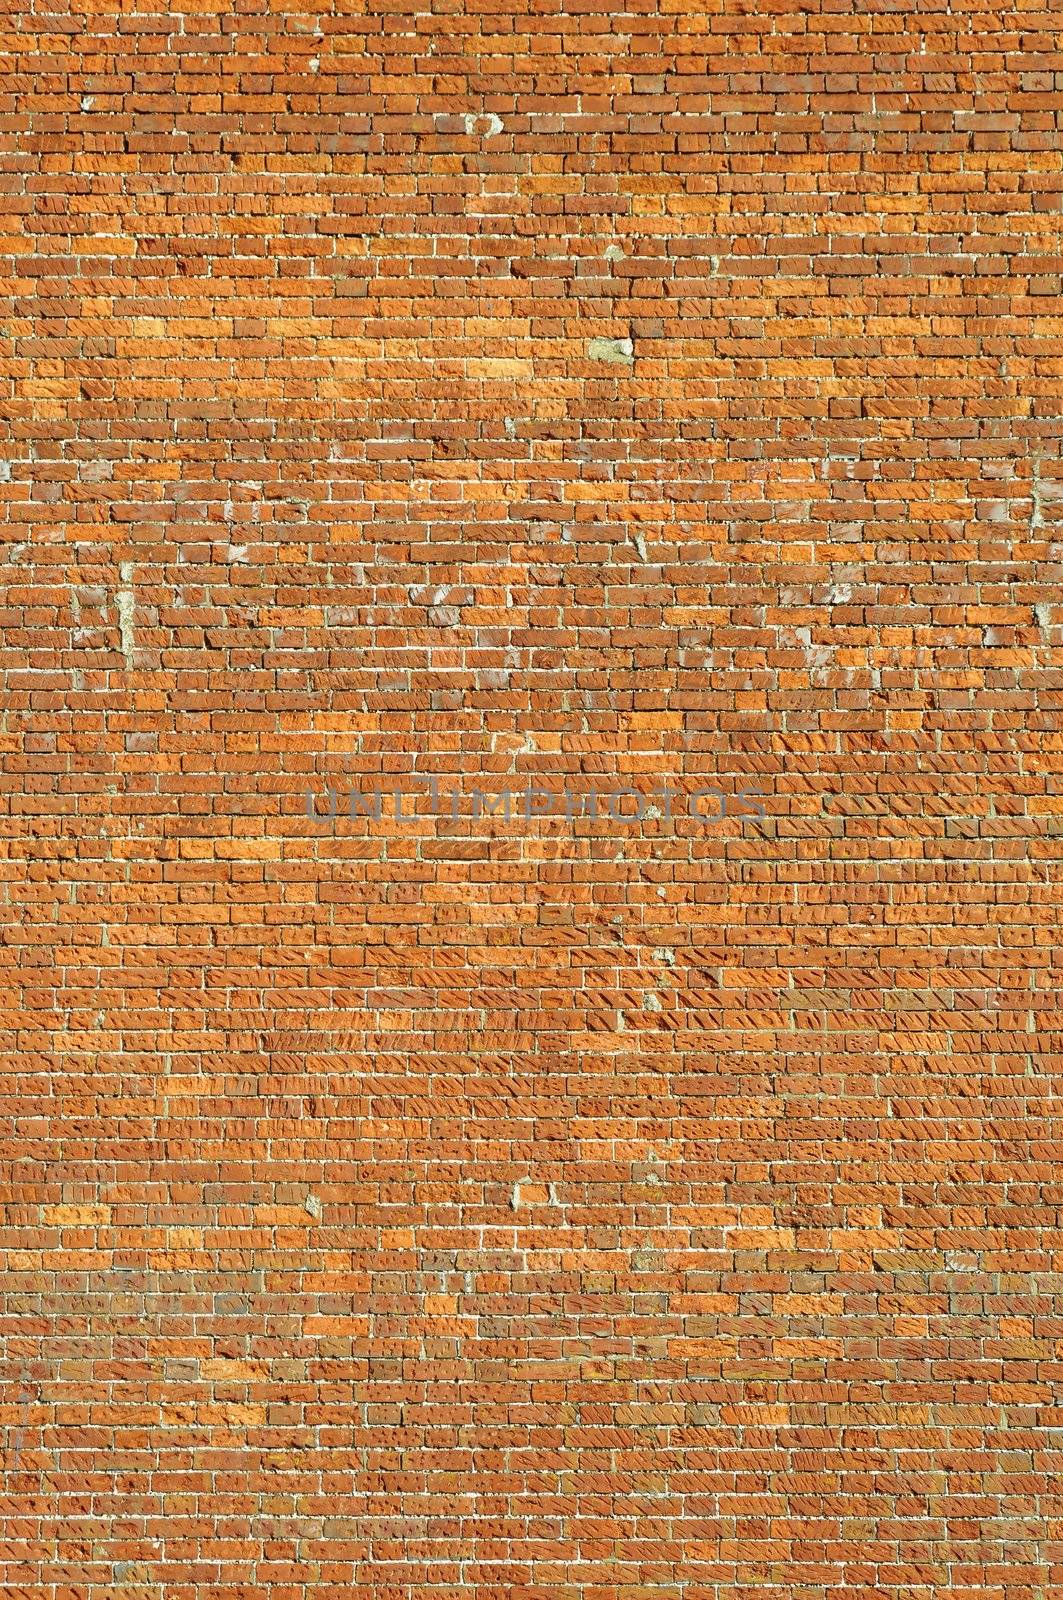 A vertical brick wall background